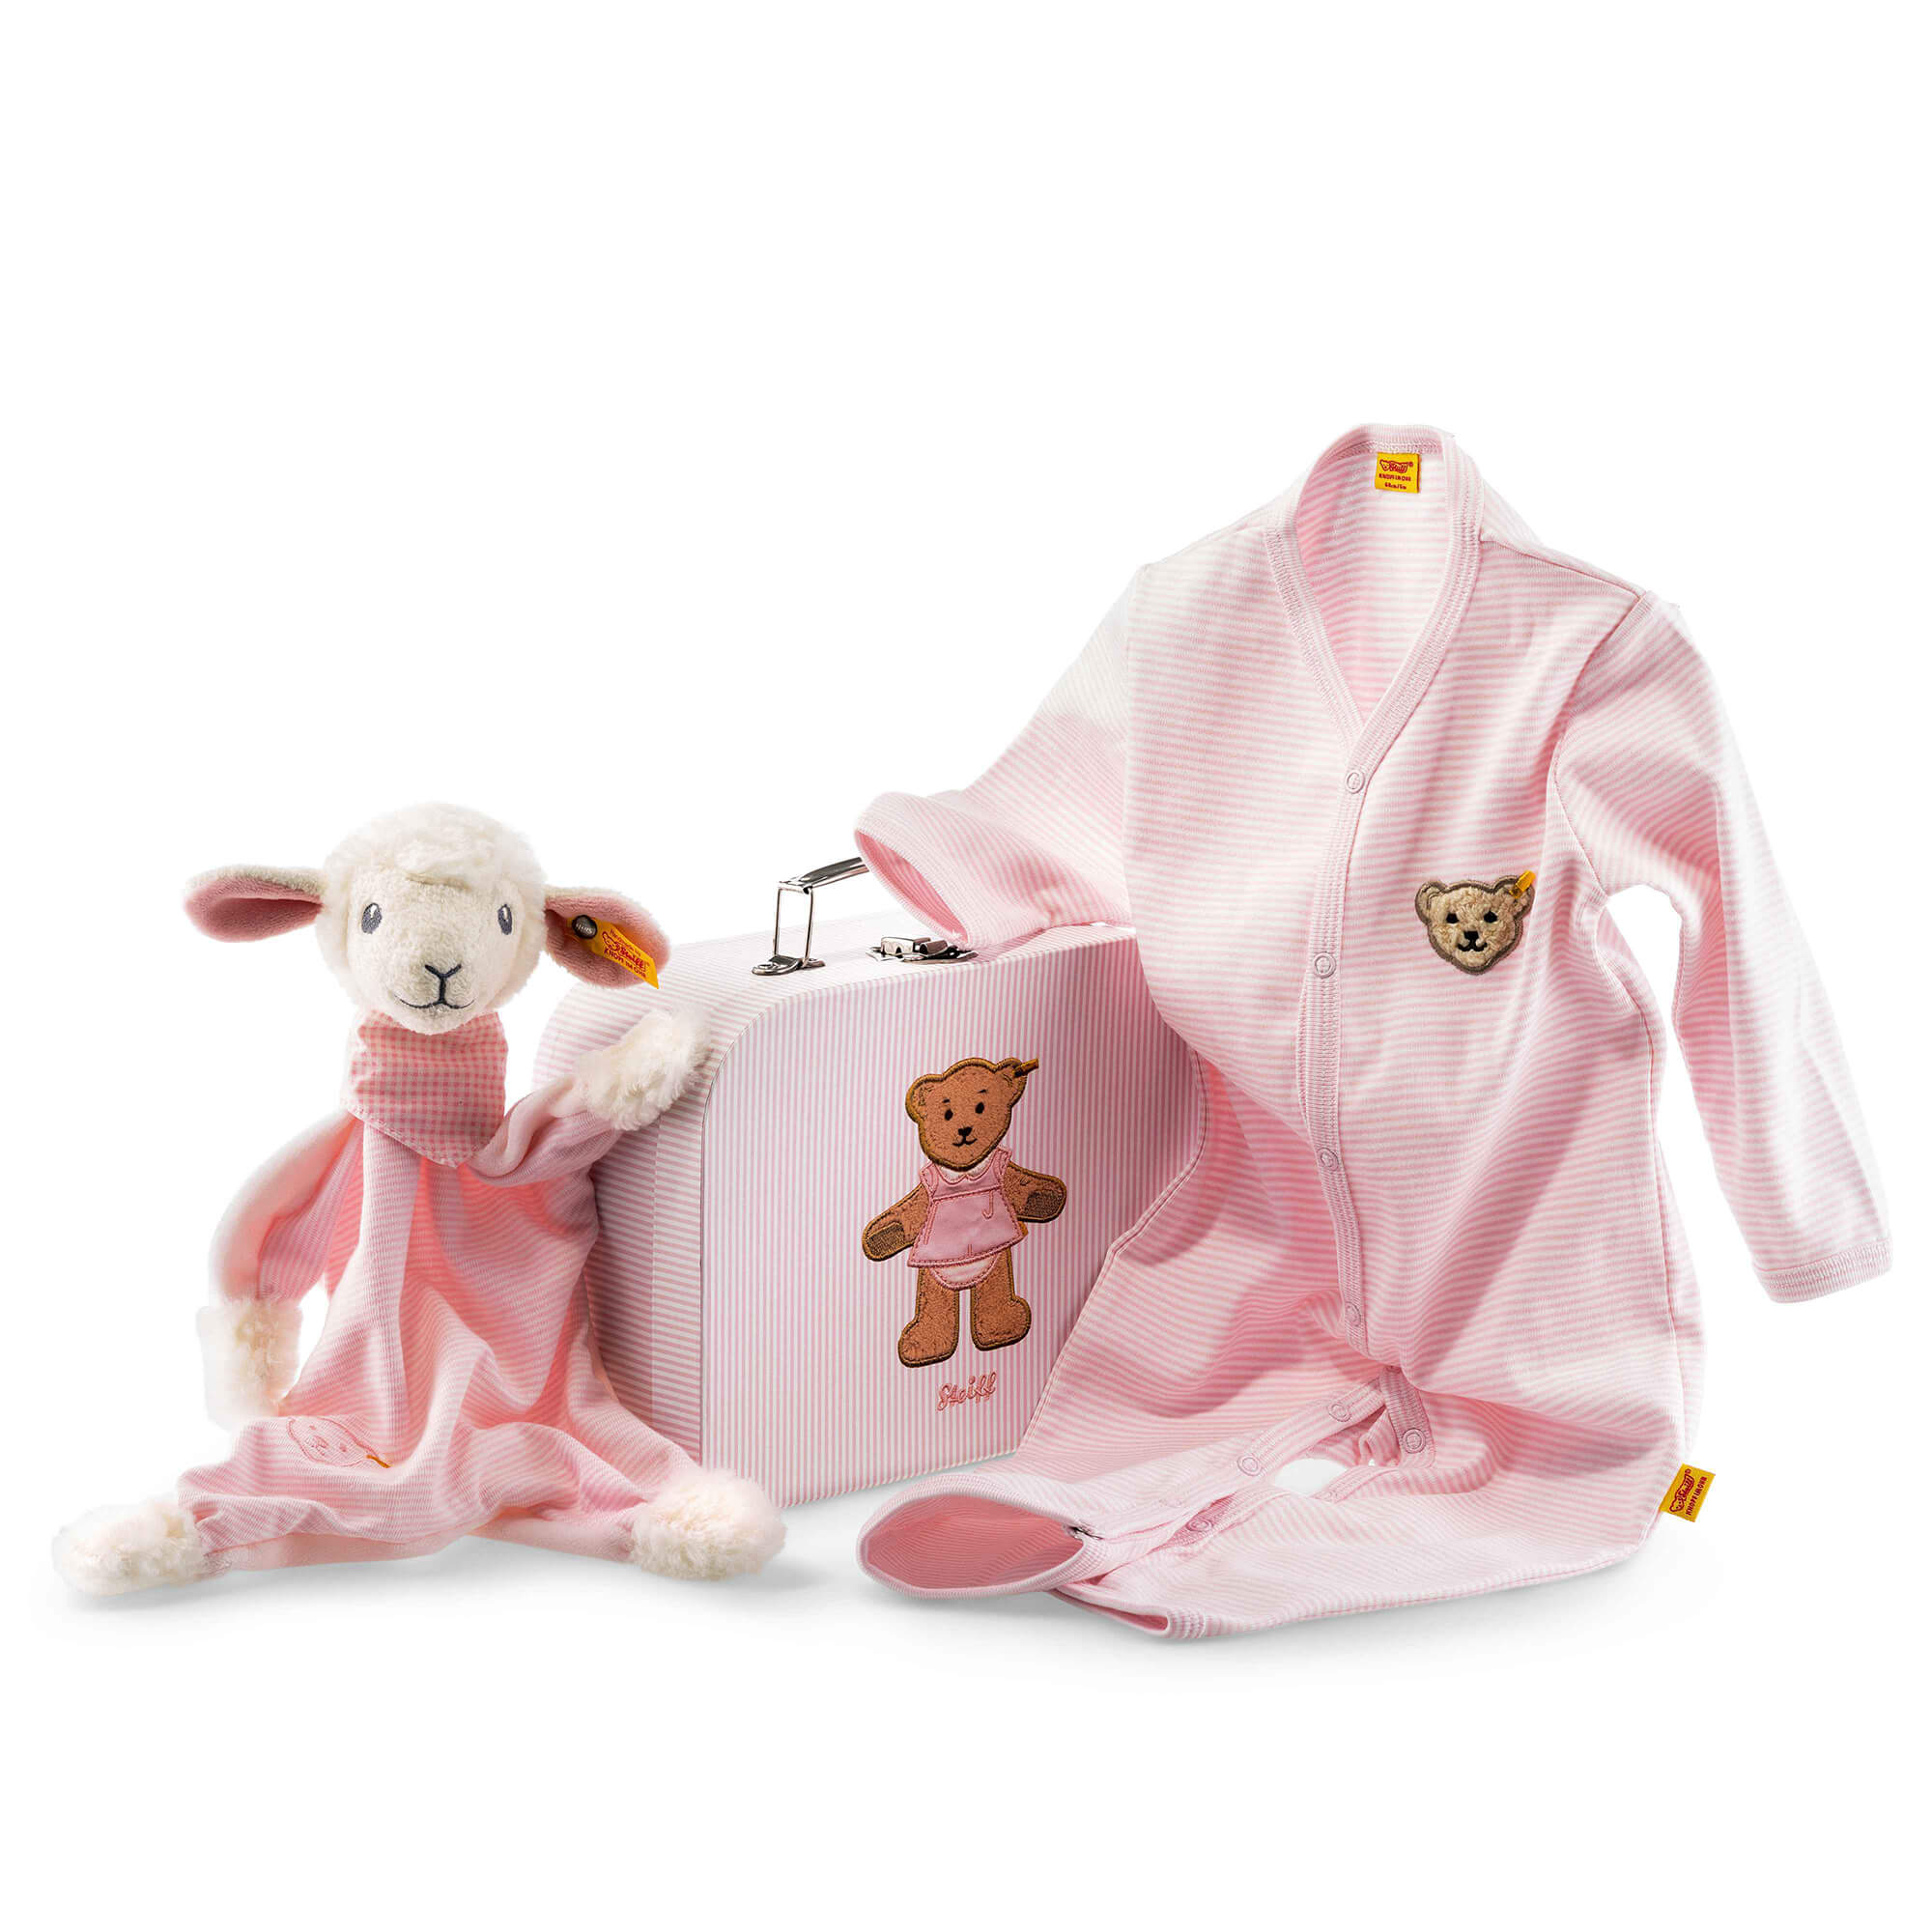 Sweet Dreams Lamb Gift Set - Comforter & Romper - Steiff Babyworld - Pink